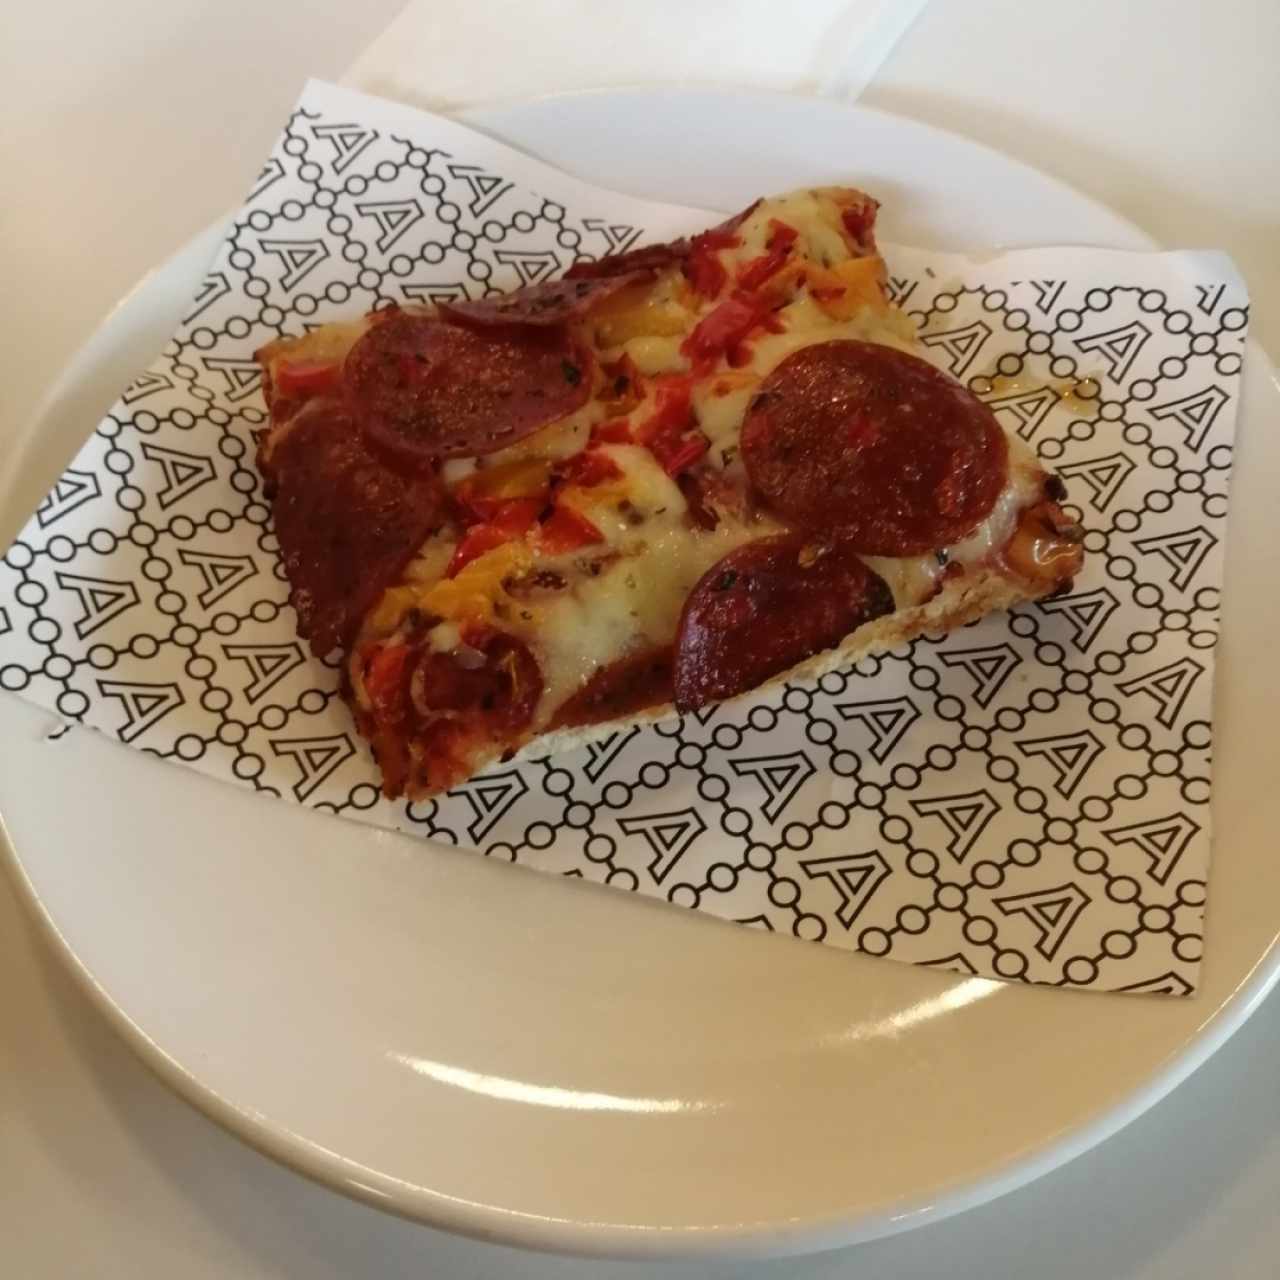 Slide de pizza de peperonni